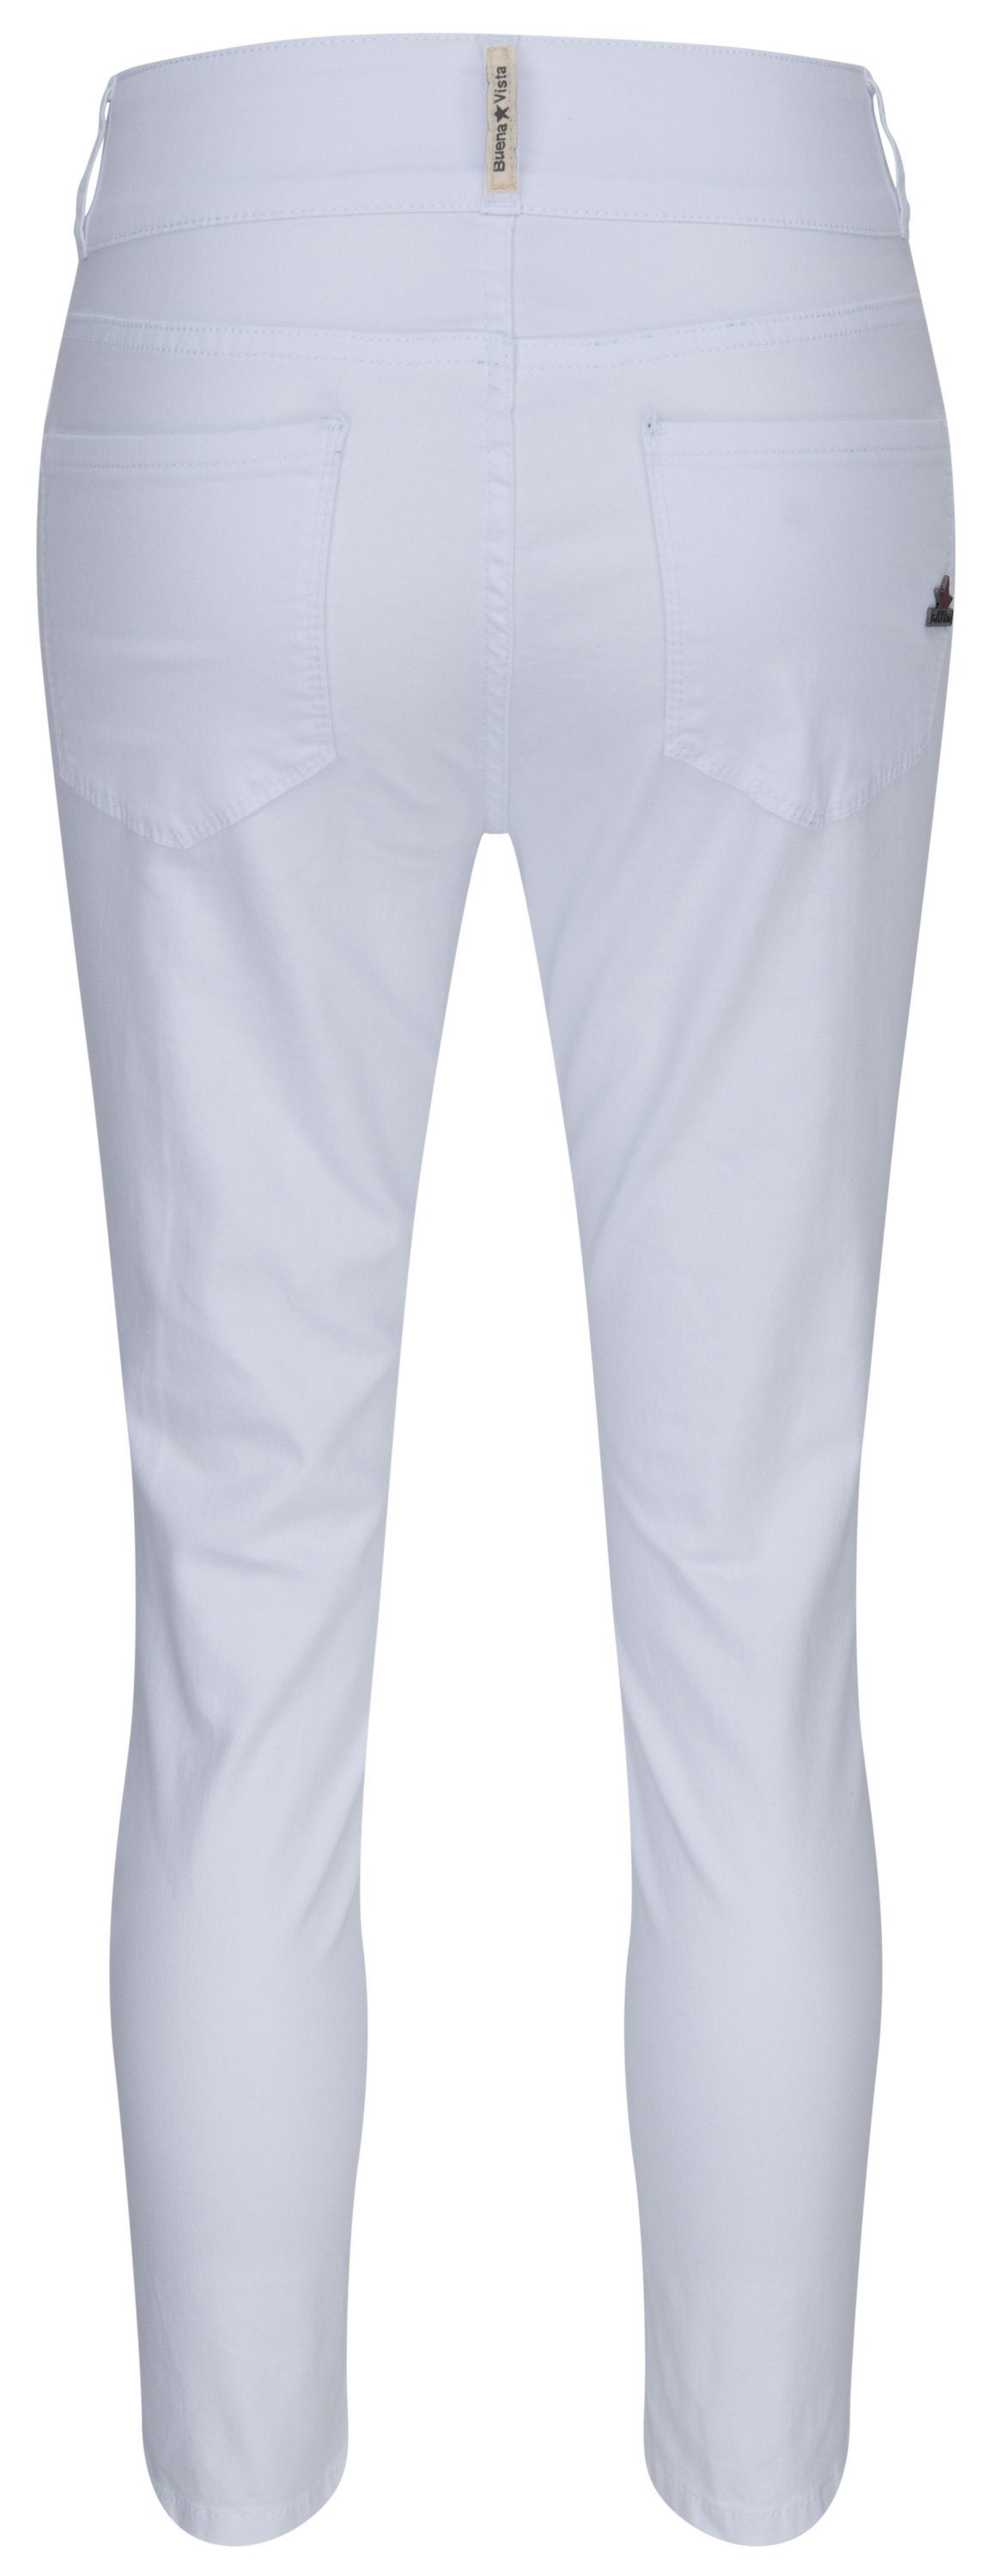 2104 TUMMYLESS Vista Buena Stretch-Jeans J5658 - VISTA white Stretch Twill 502.032 7/8 BUENA